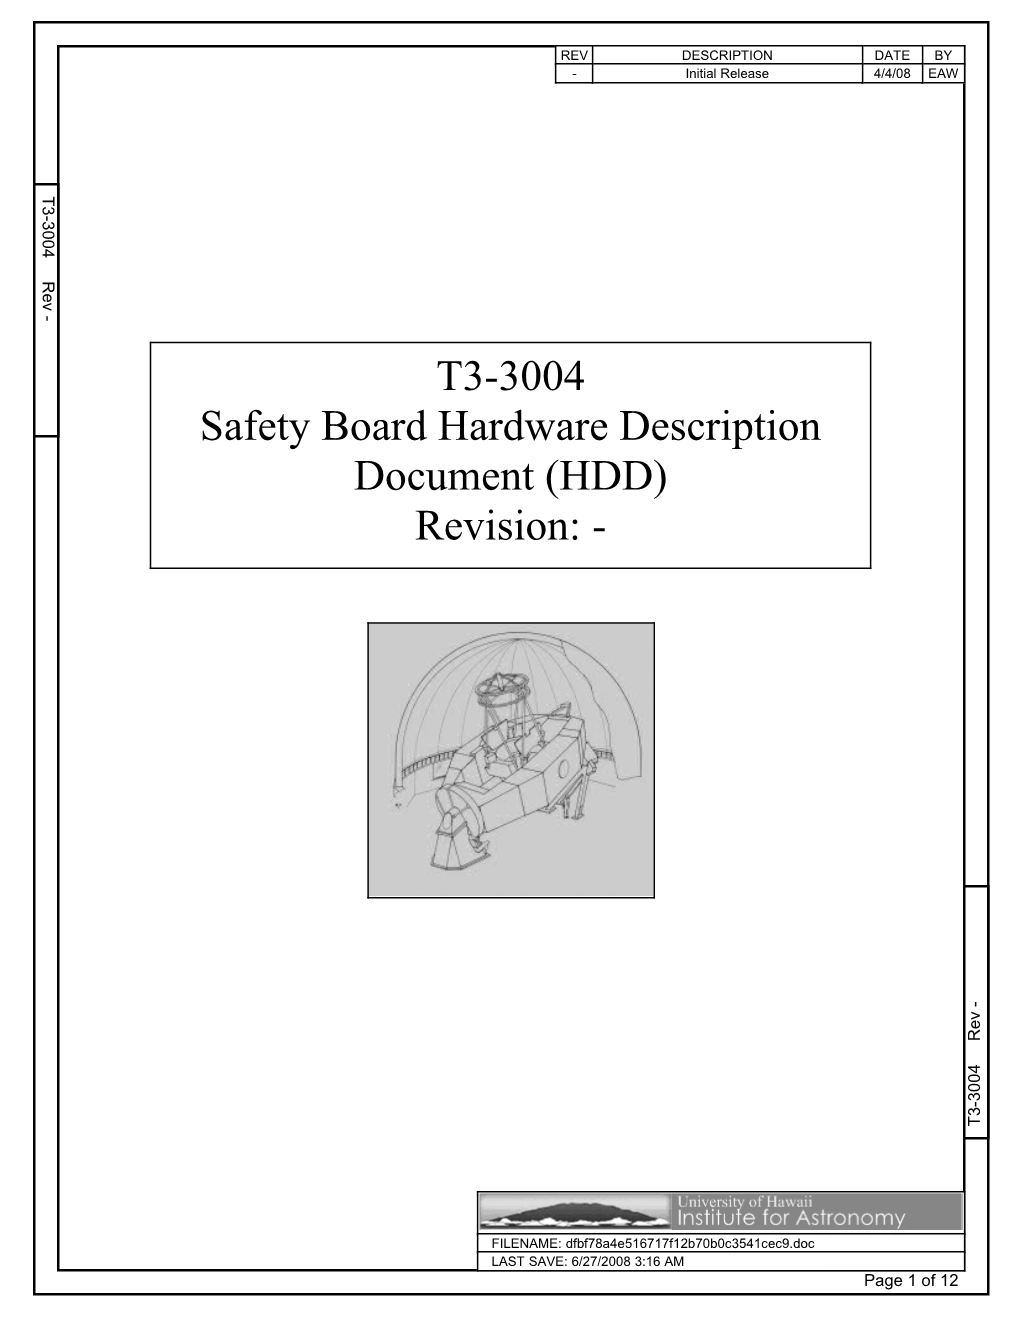 Safety Board Hardware Description Document (HDD)